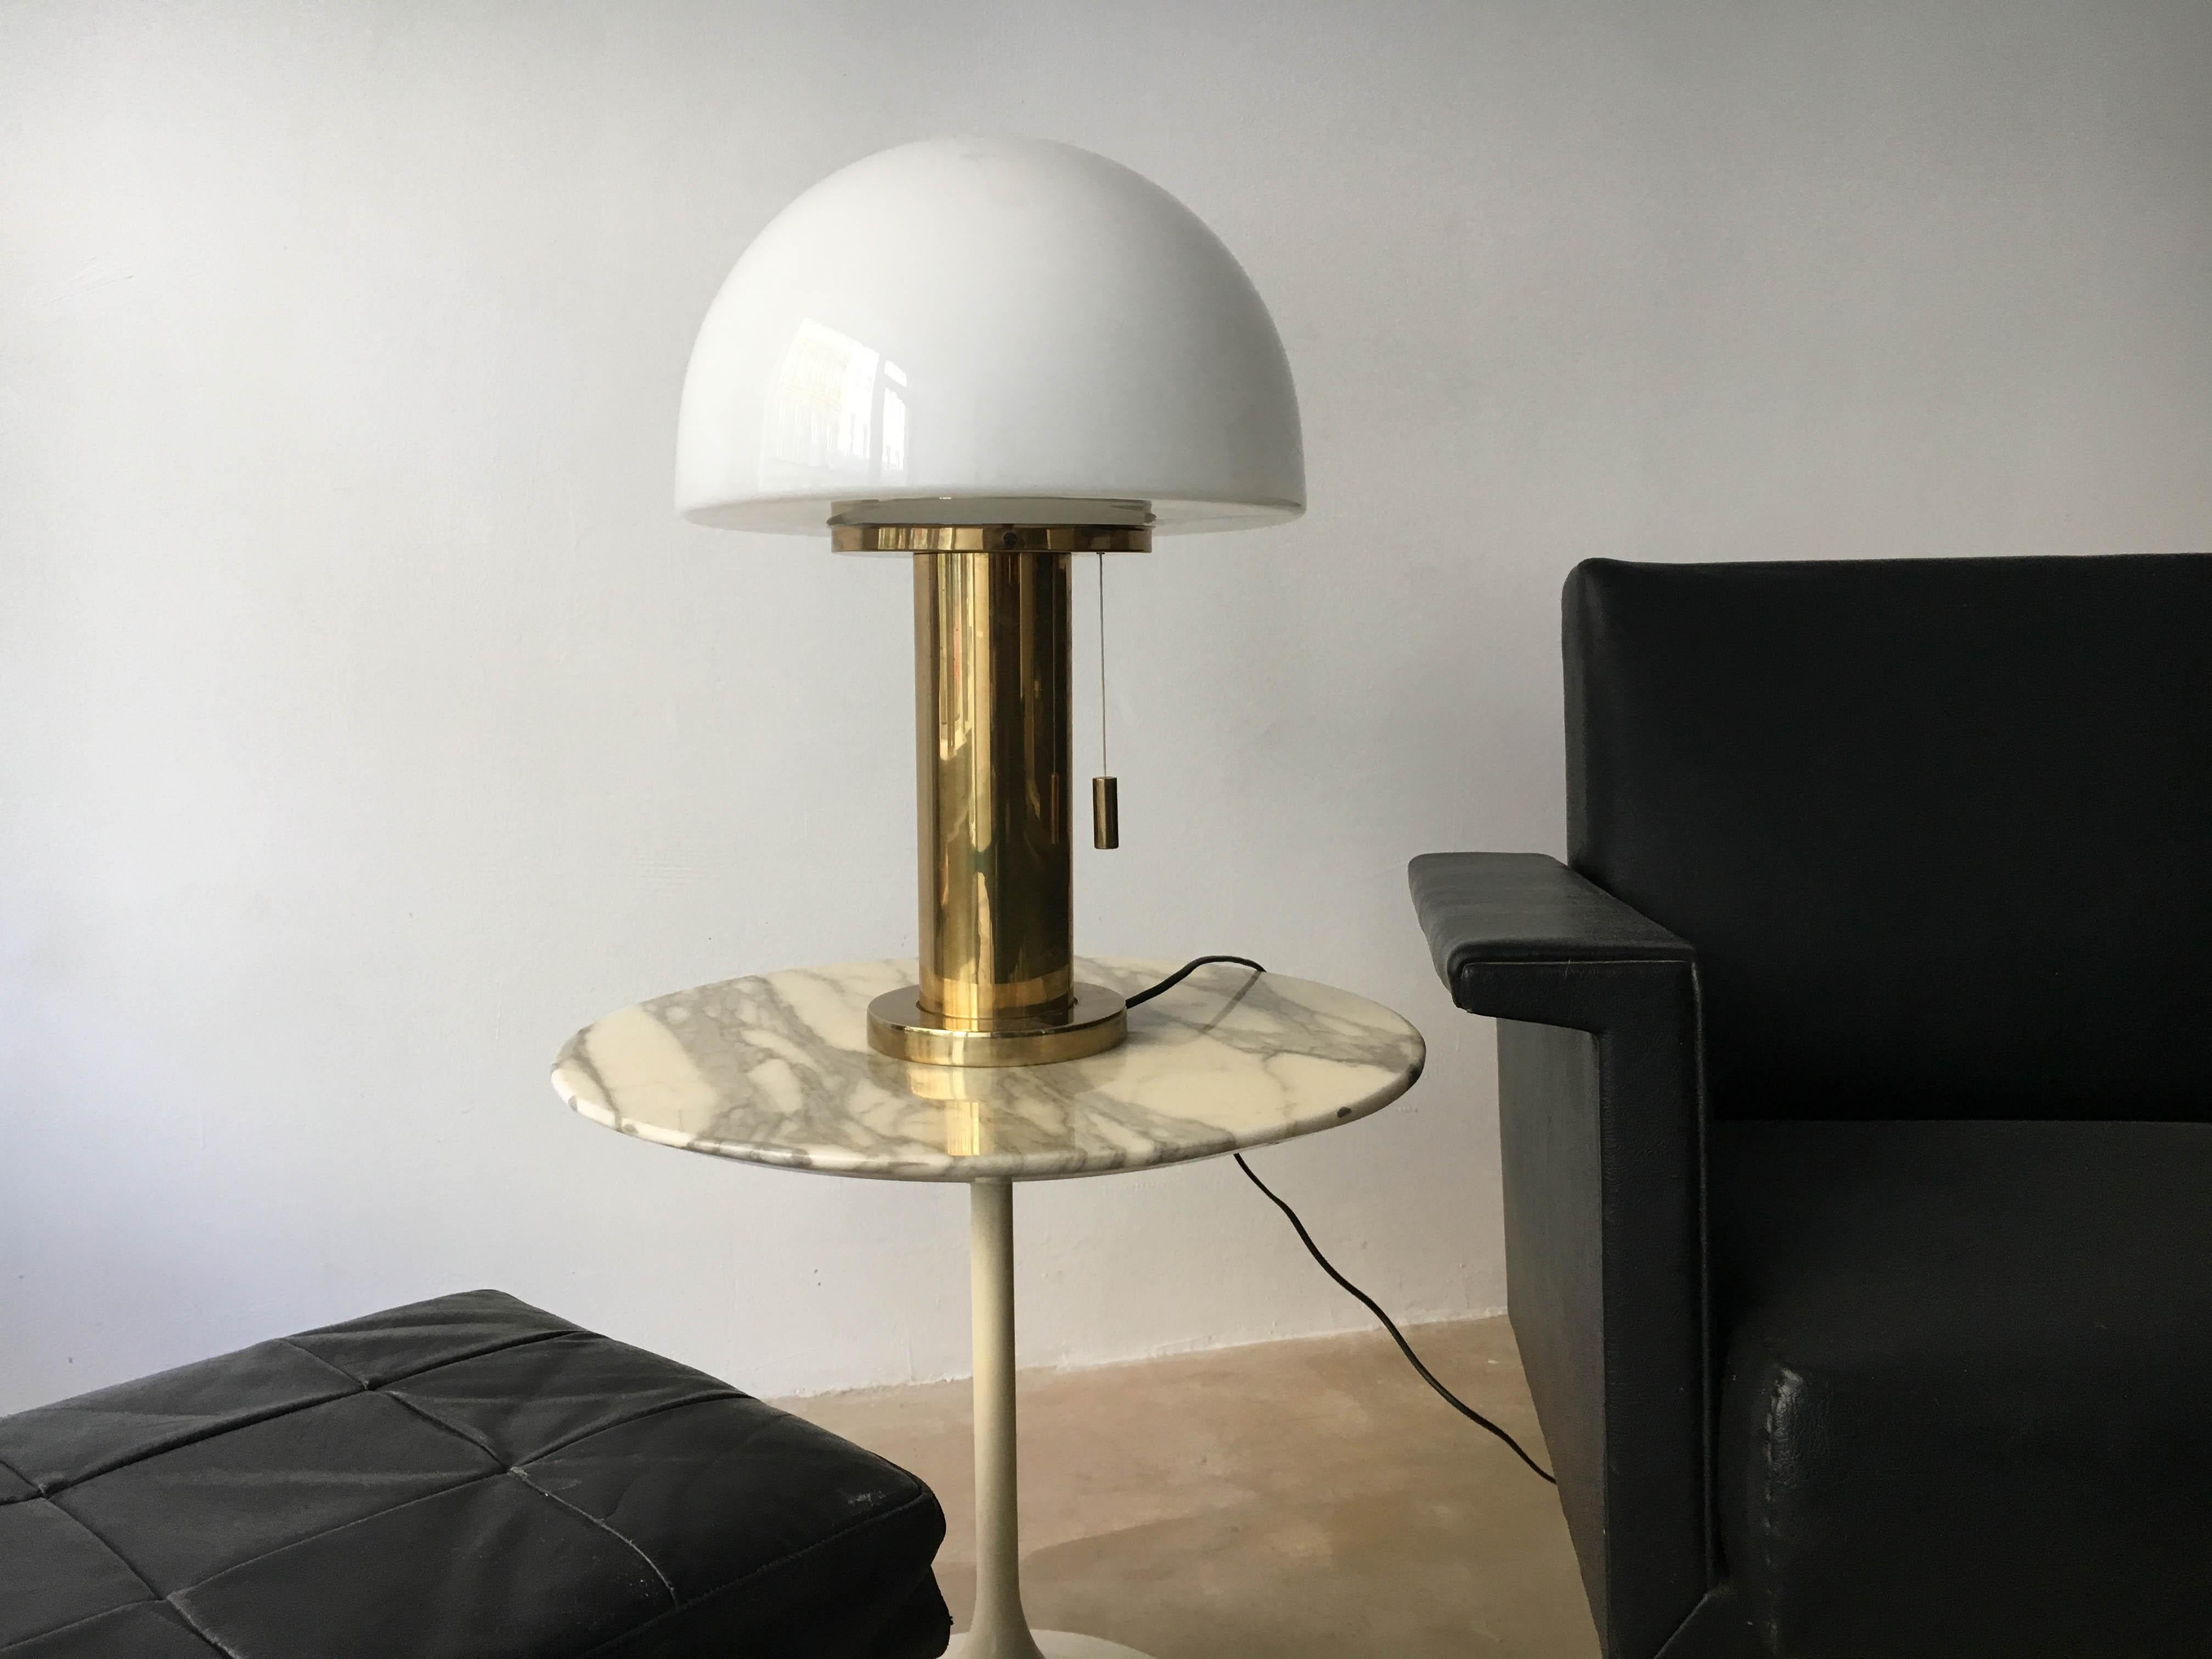 1970's lamp